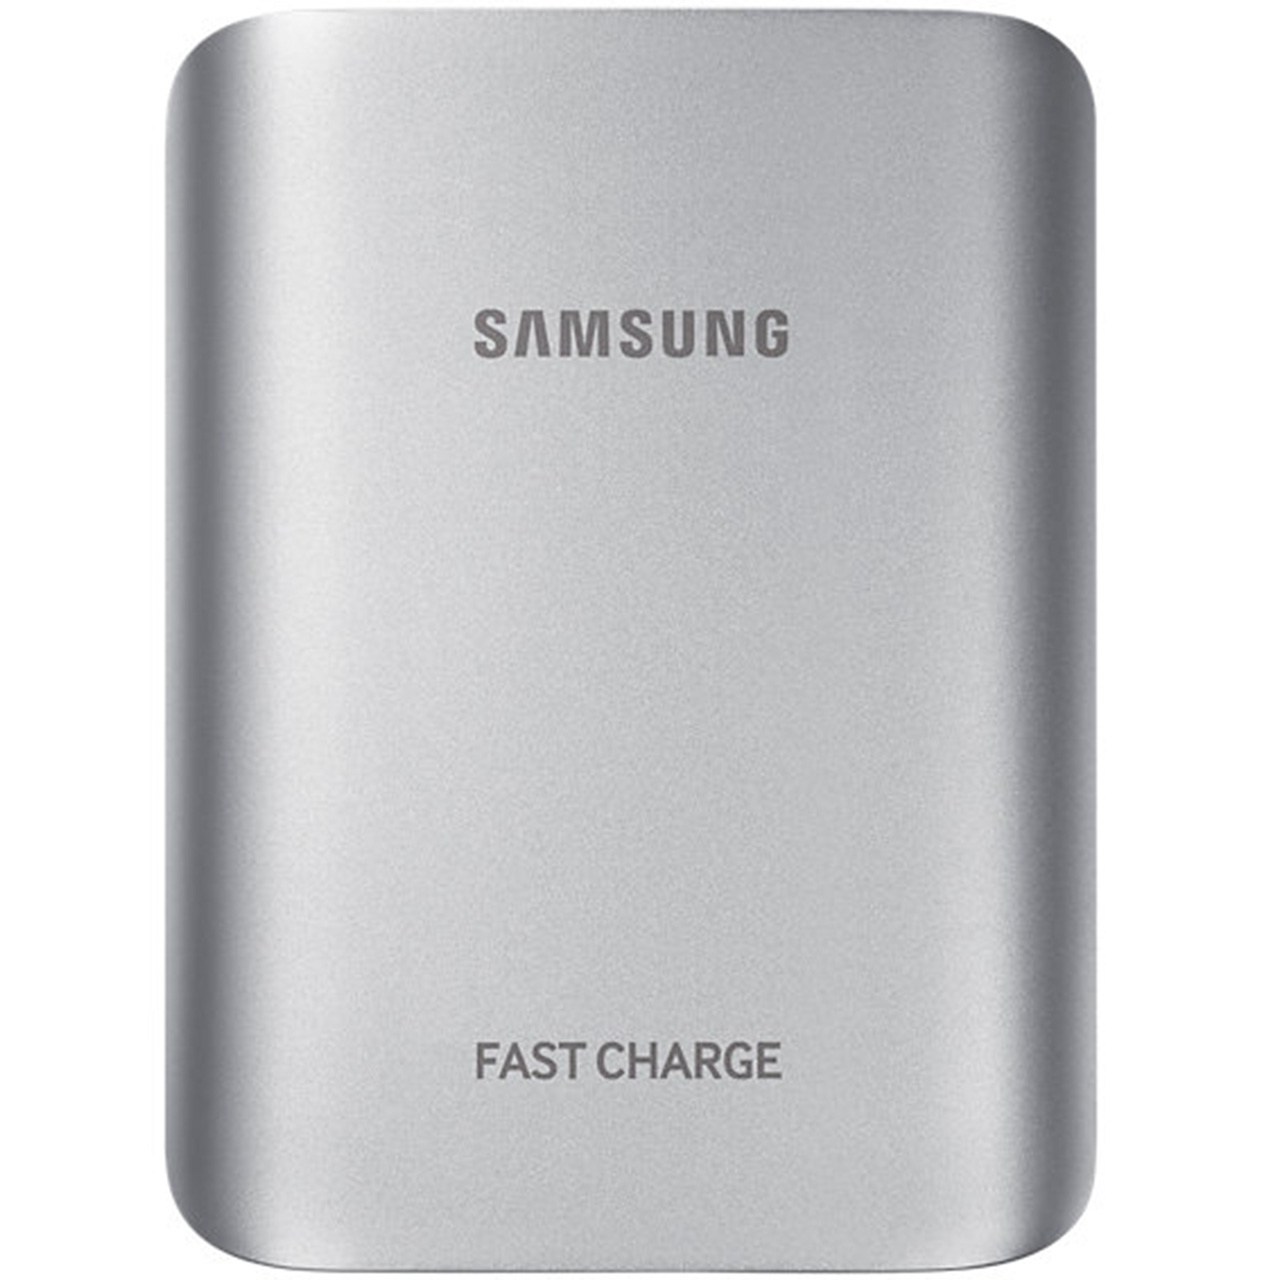 شارژر همراه سامسونگ مدل Fast Charge Battery pack با ظرفیت 10200 میلی آمپر ساعت